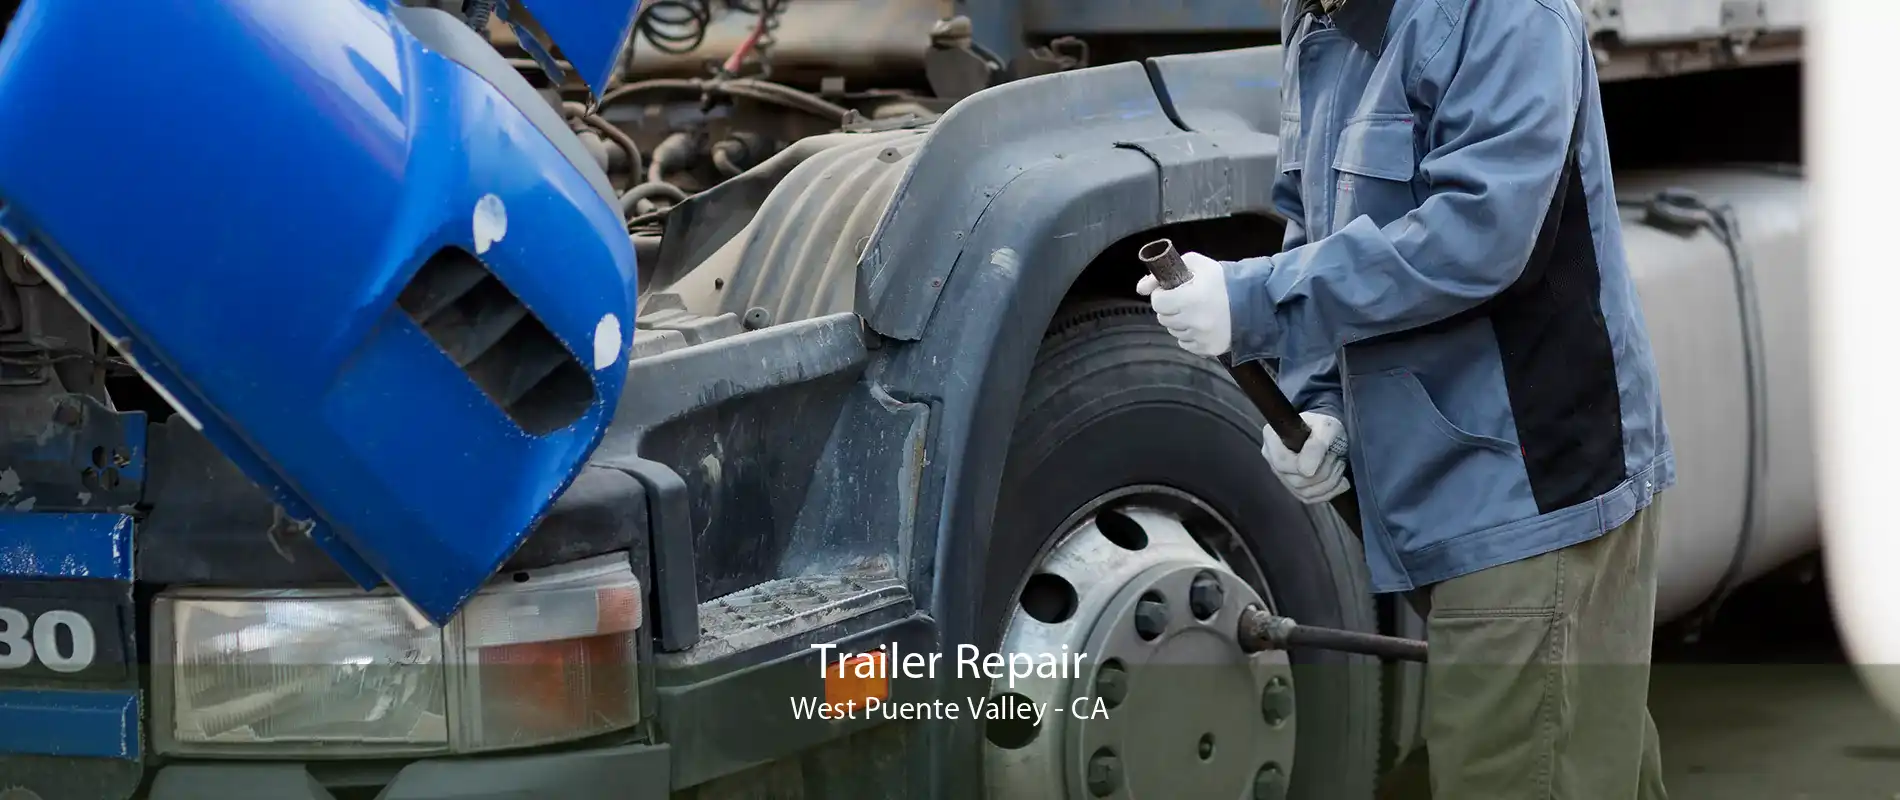 Trailer Repair West Puente Valley - CA